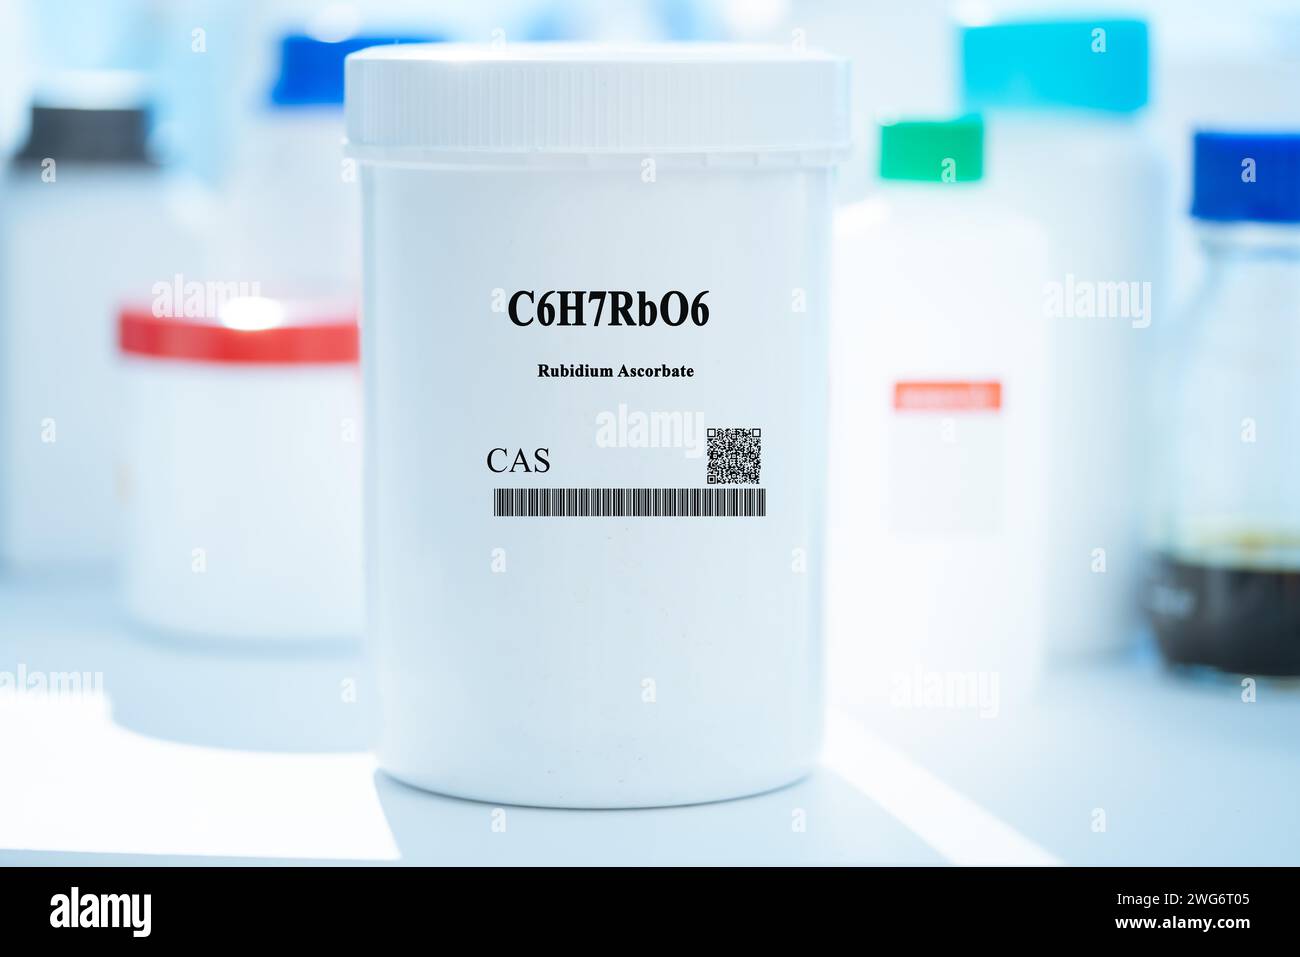 C6H7RbO6 rubidium ascorbate CAS  chemical substance in white plastic laboratory packaging Stock Photo